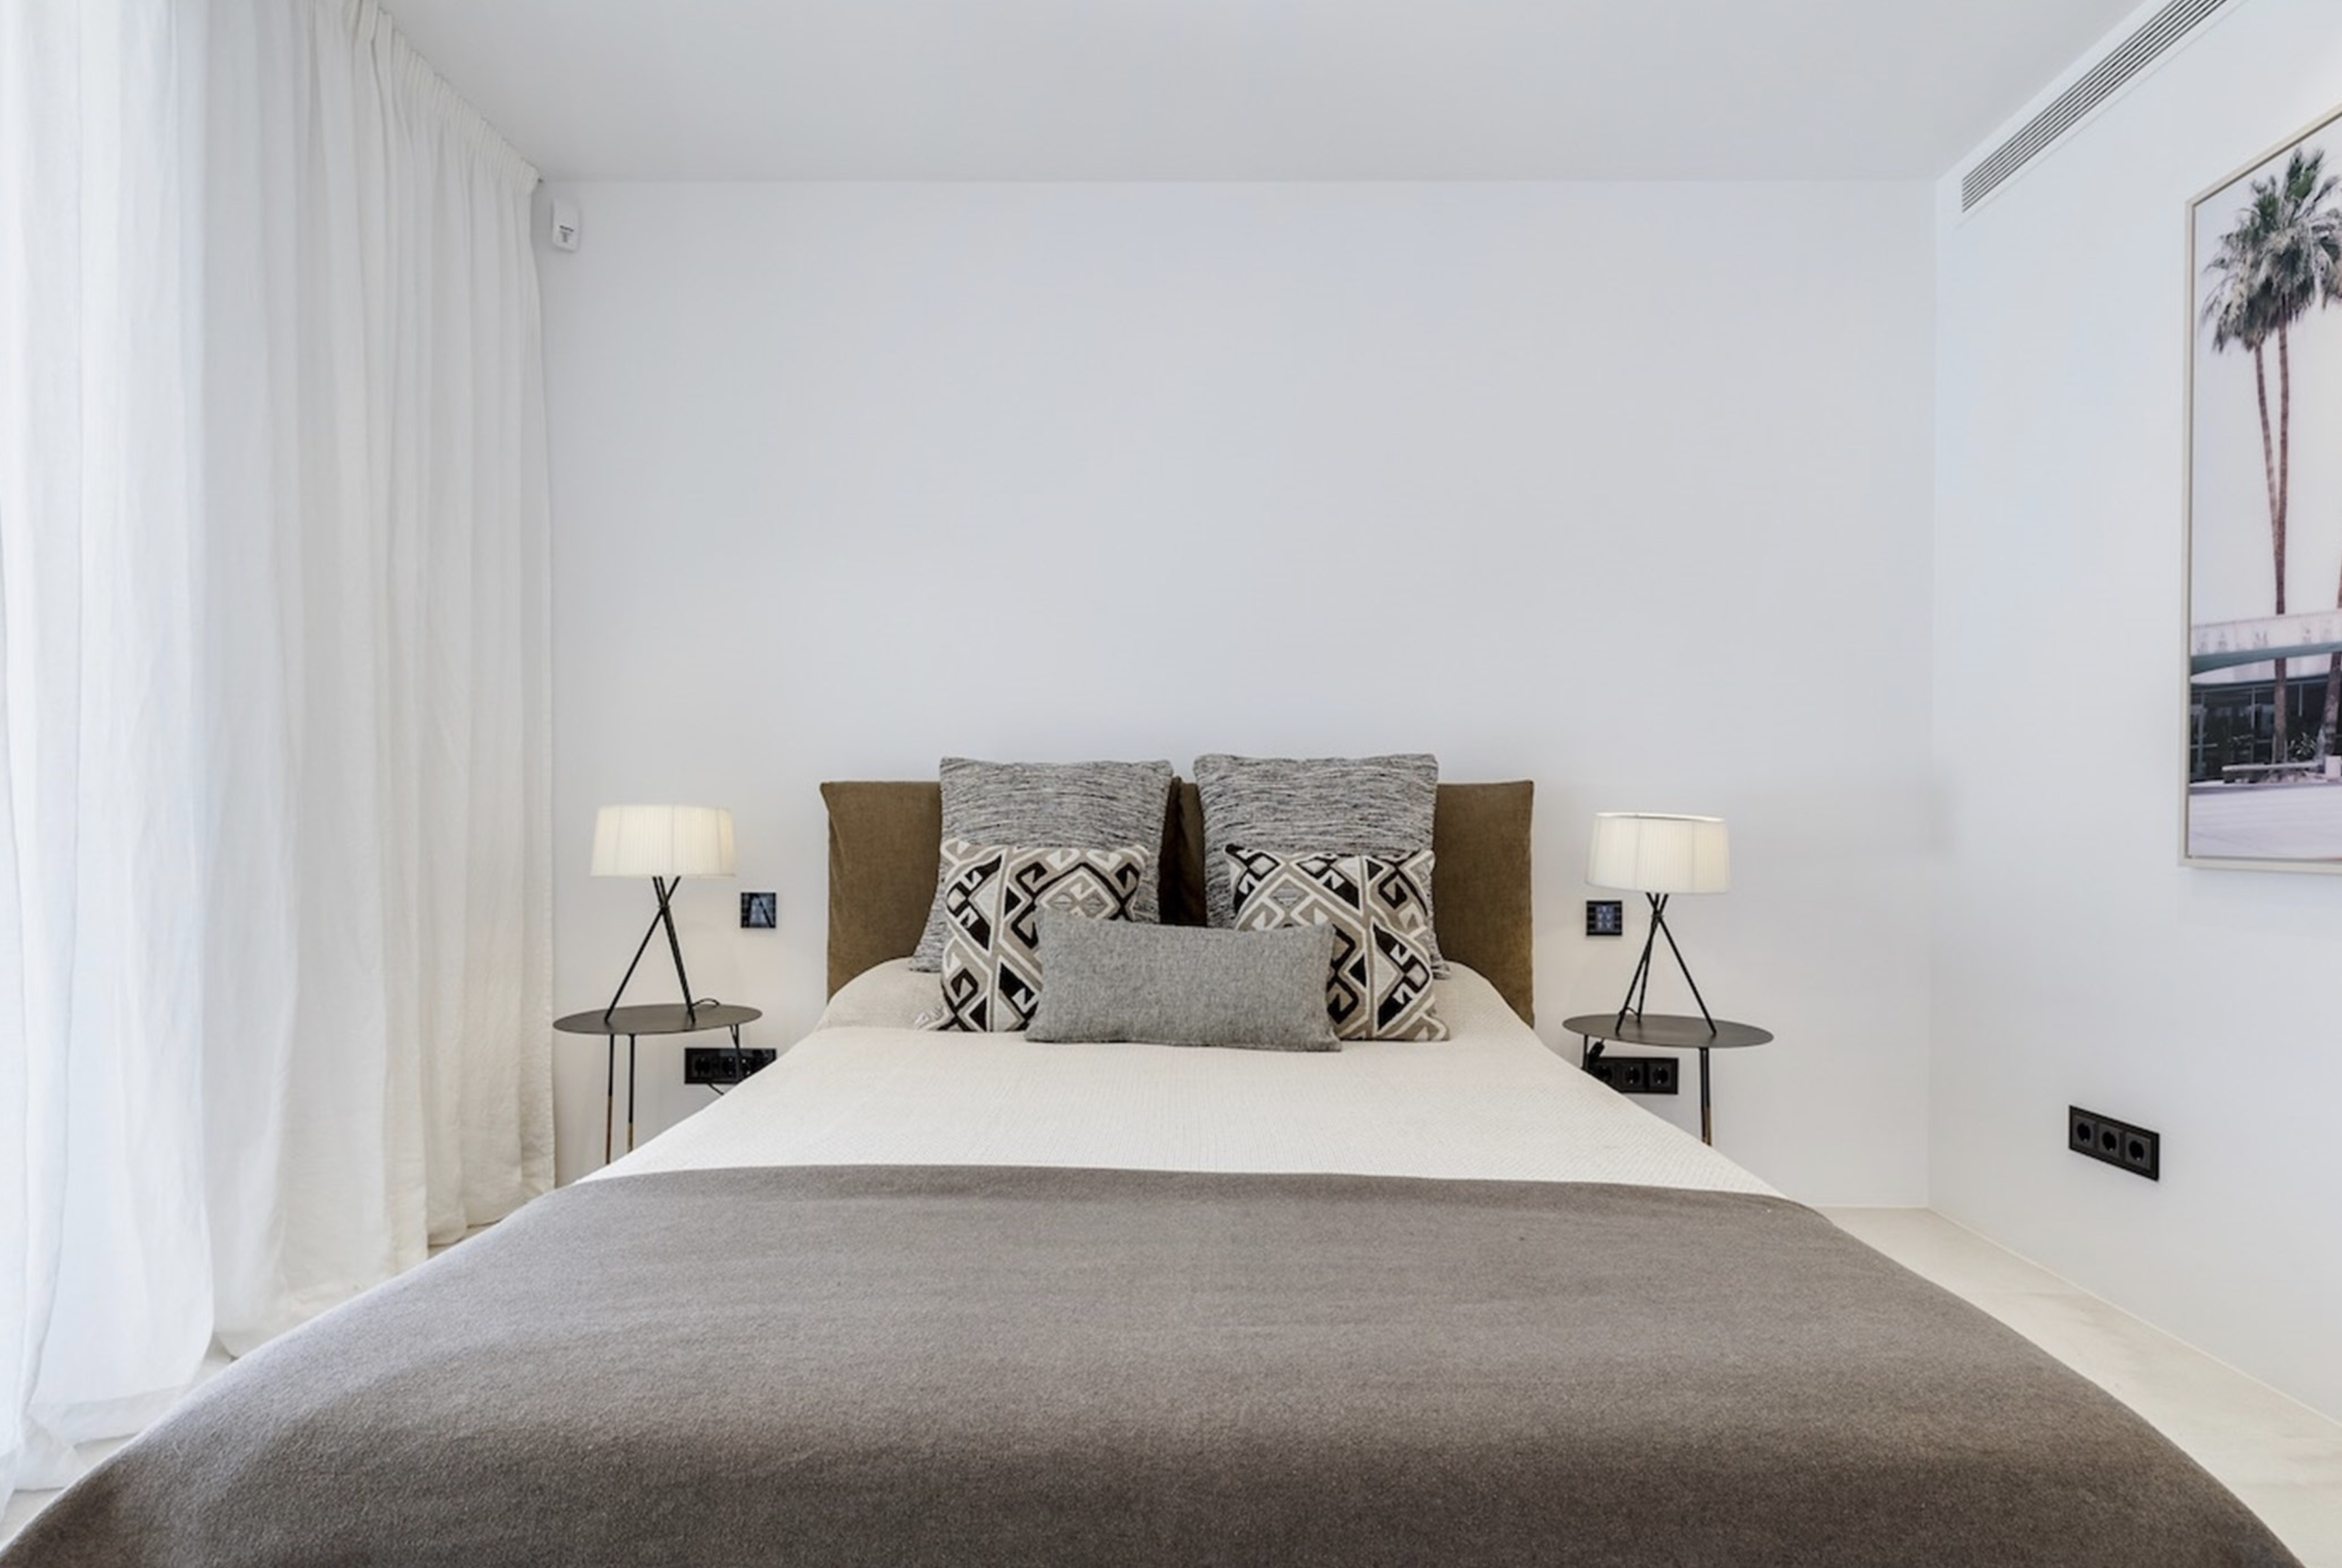 Resa Estates can nemo luxury villa Pep simo Ibiza bedroom 4.png